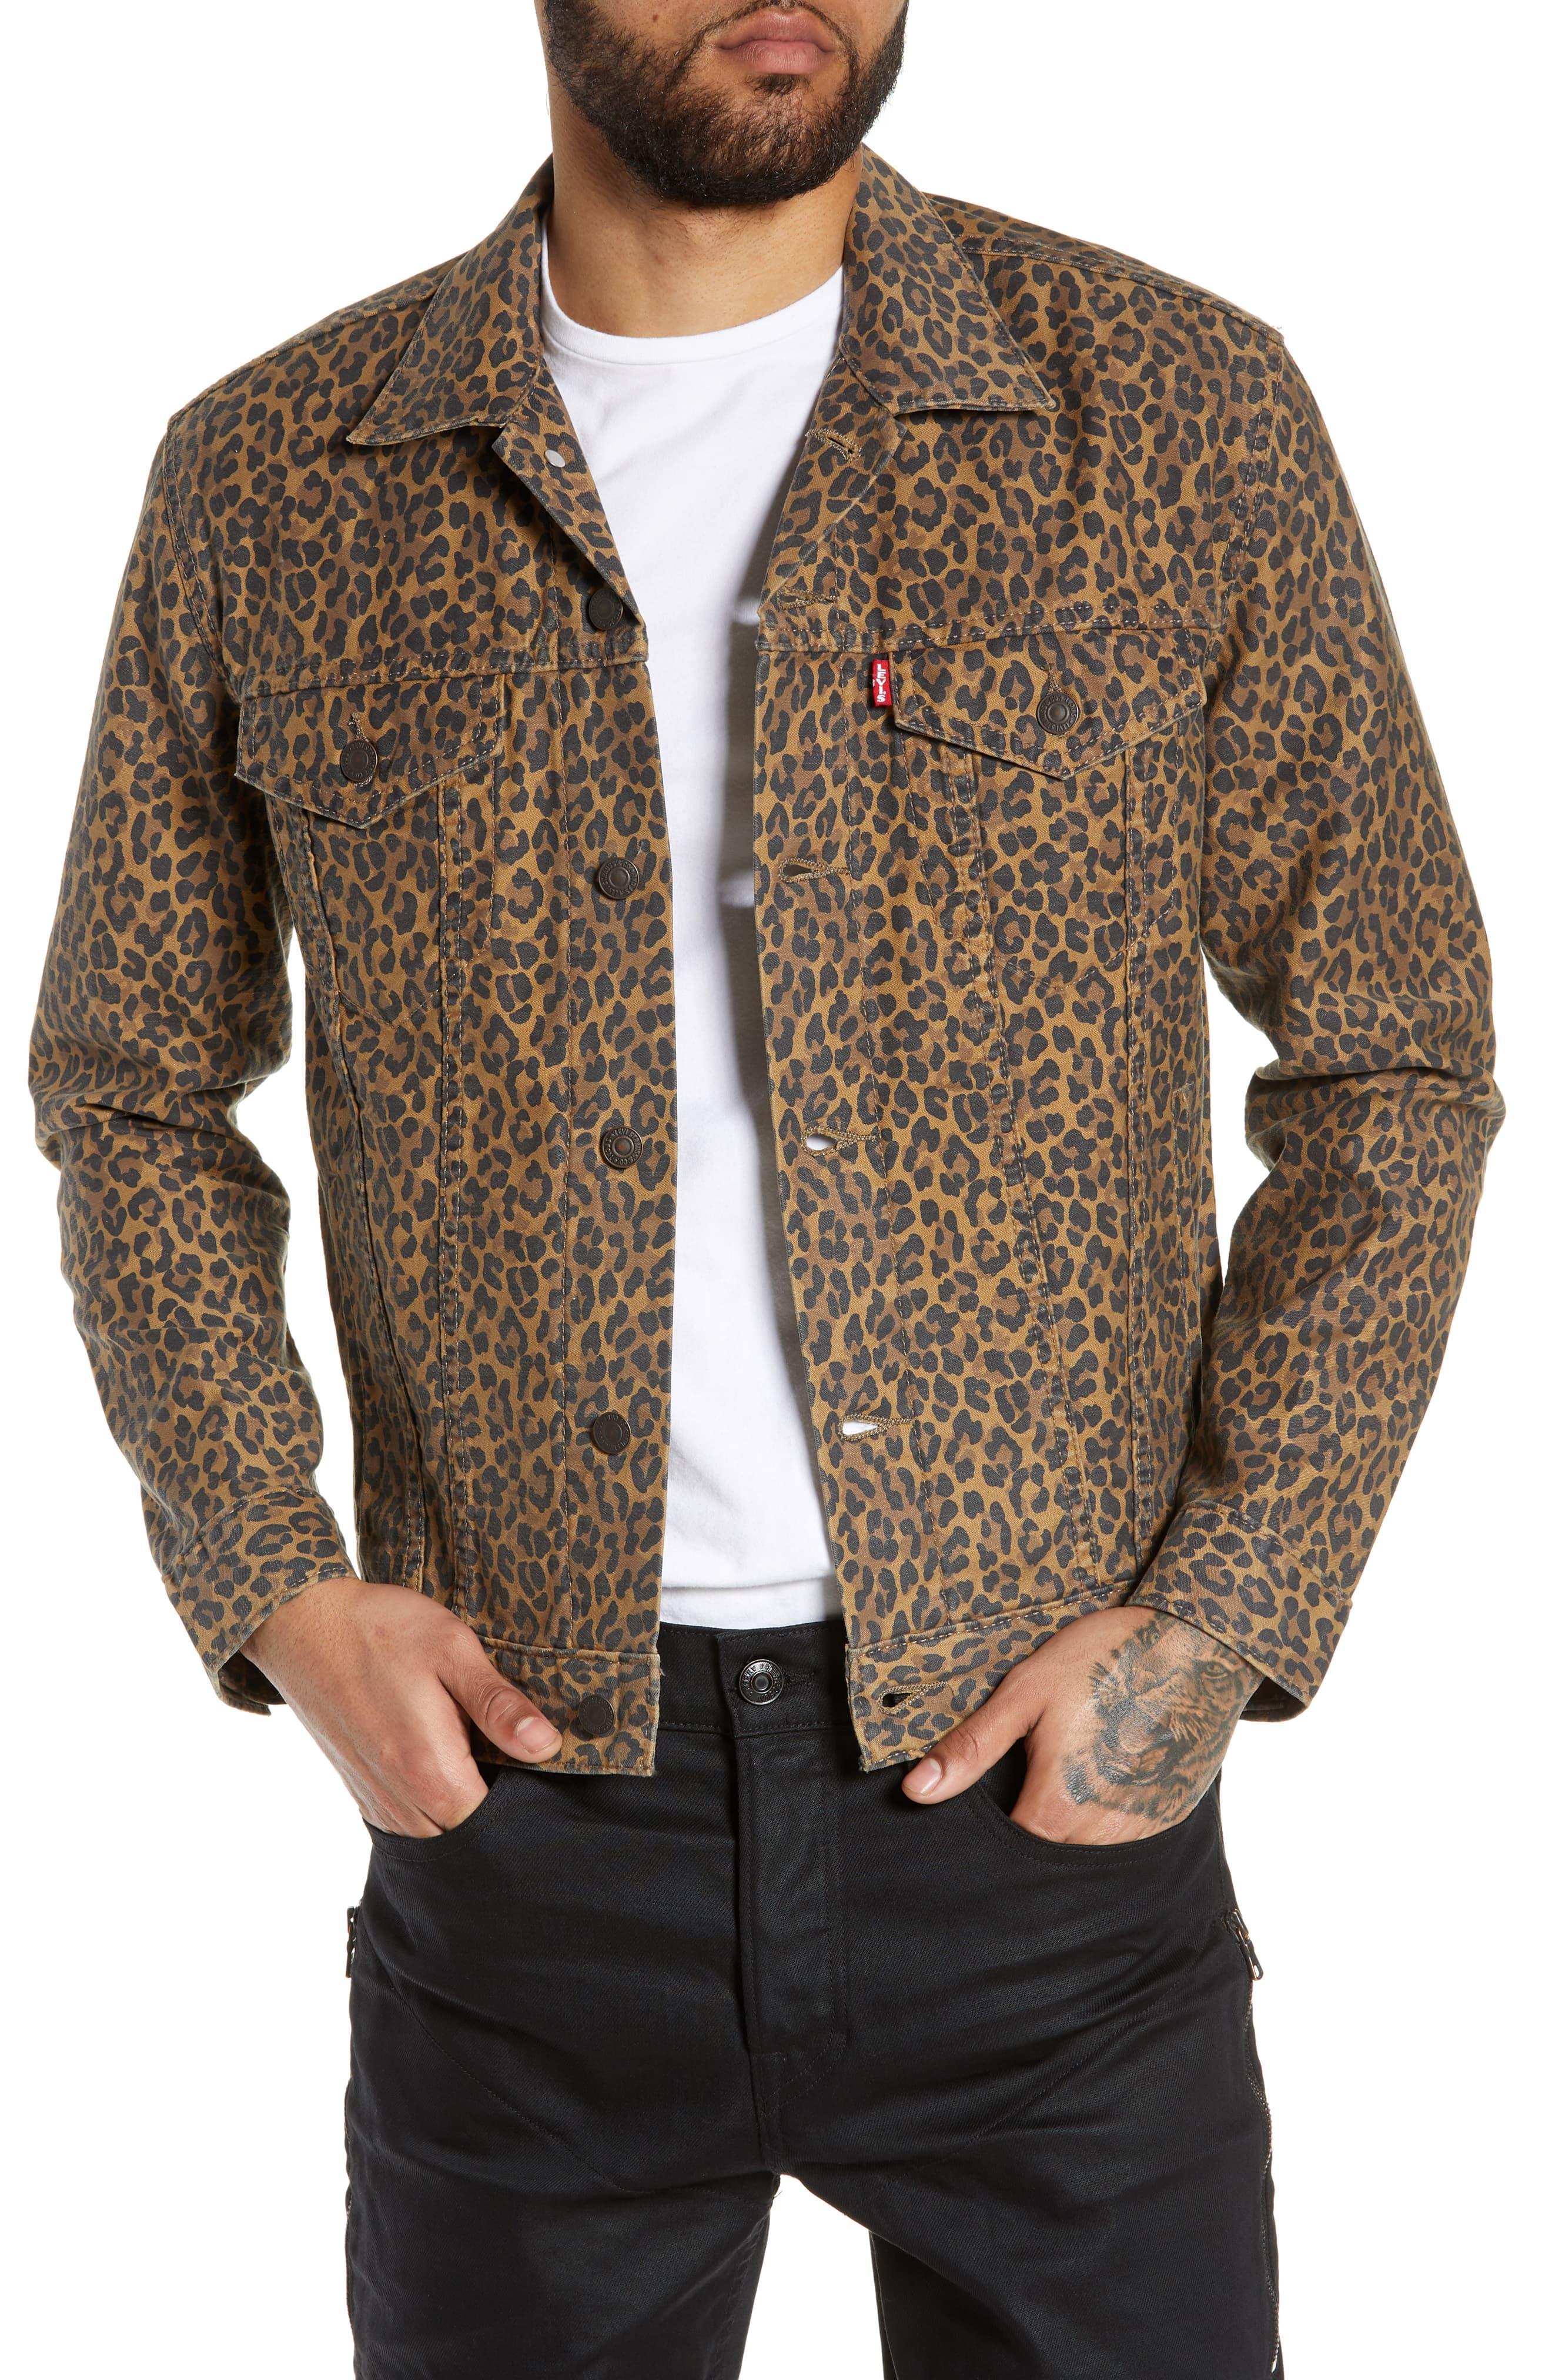 levi's leopard print jacket